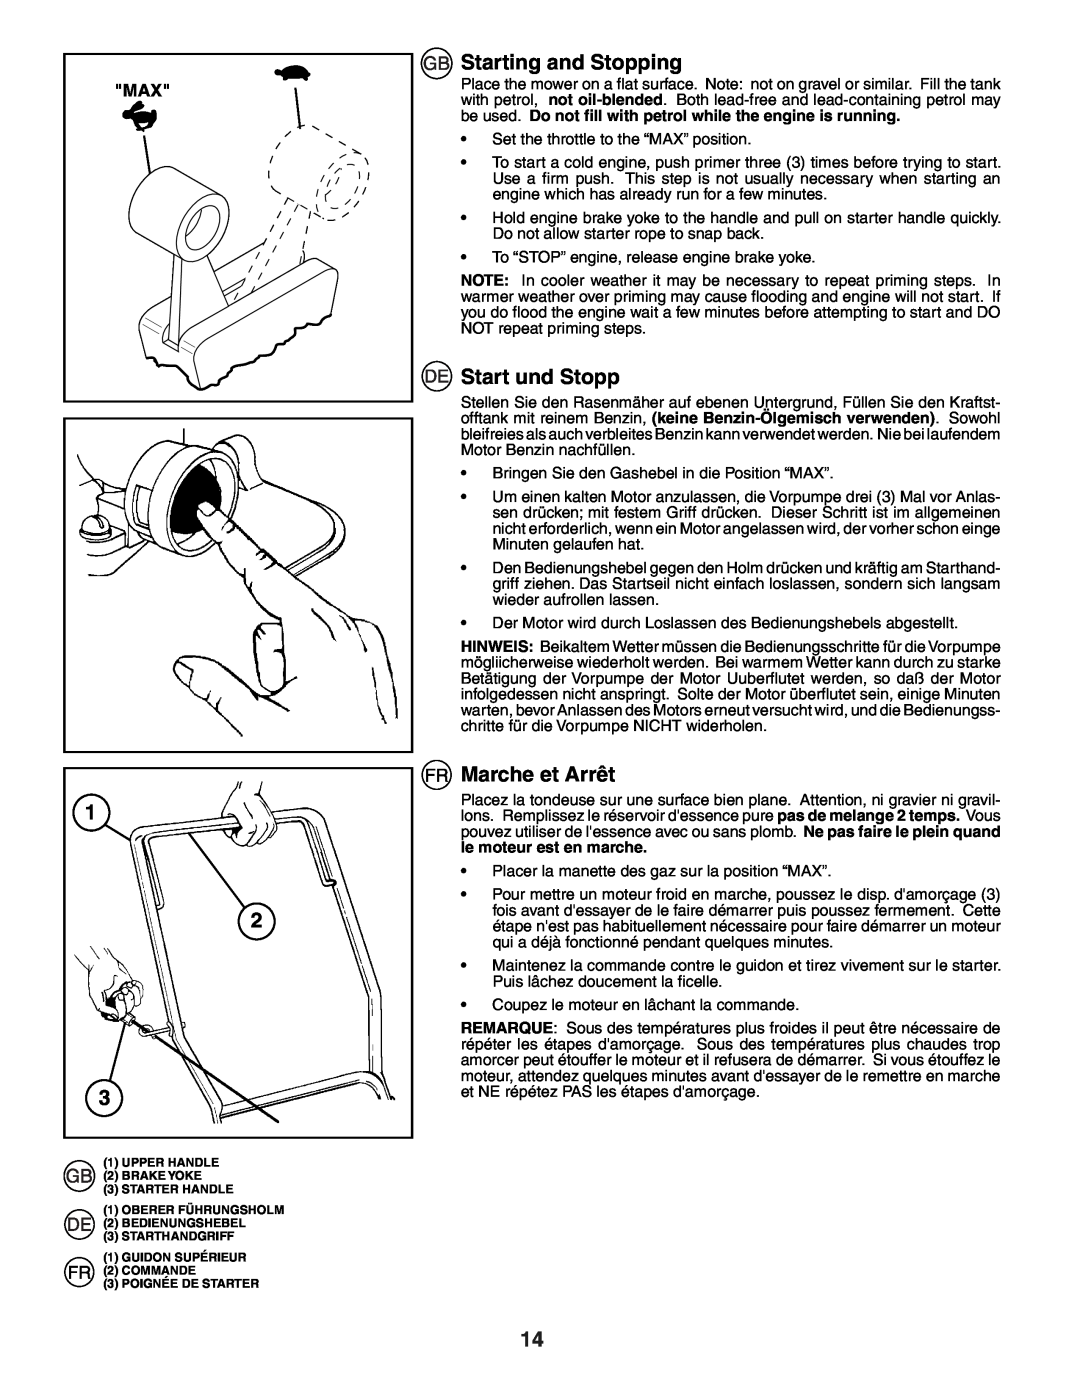 Husqvarna J50 instruction manual Starting and Stopping, Start und Stopp, Marche et Arrêt 